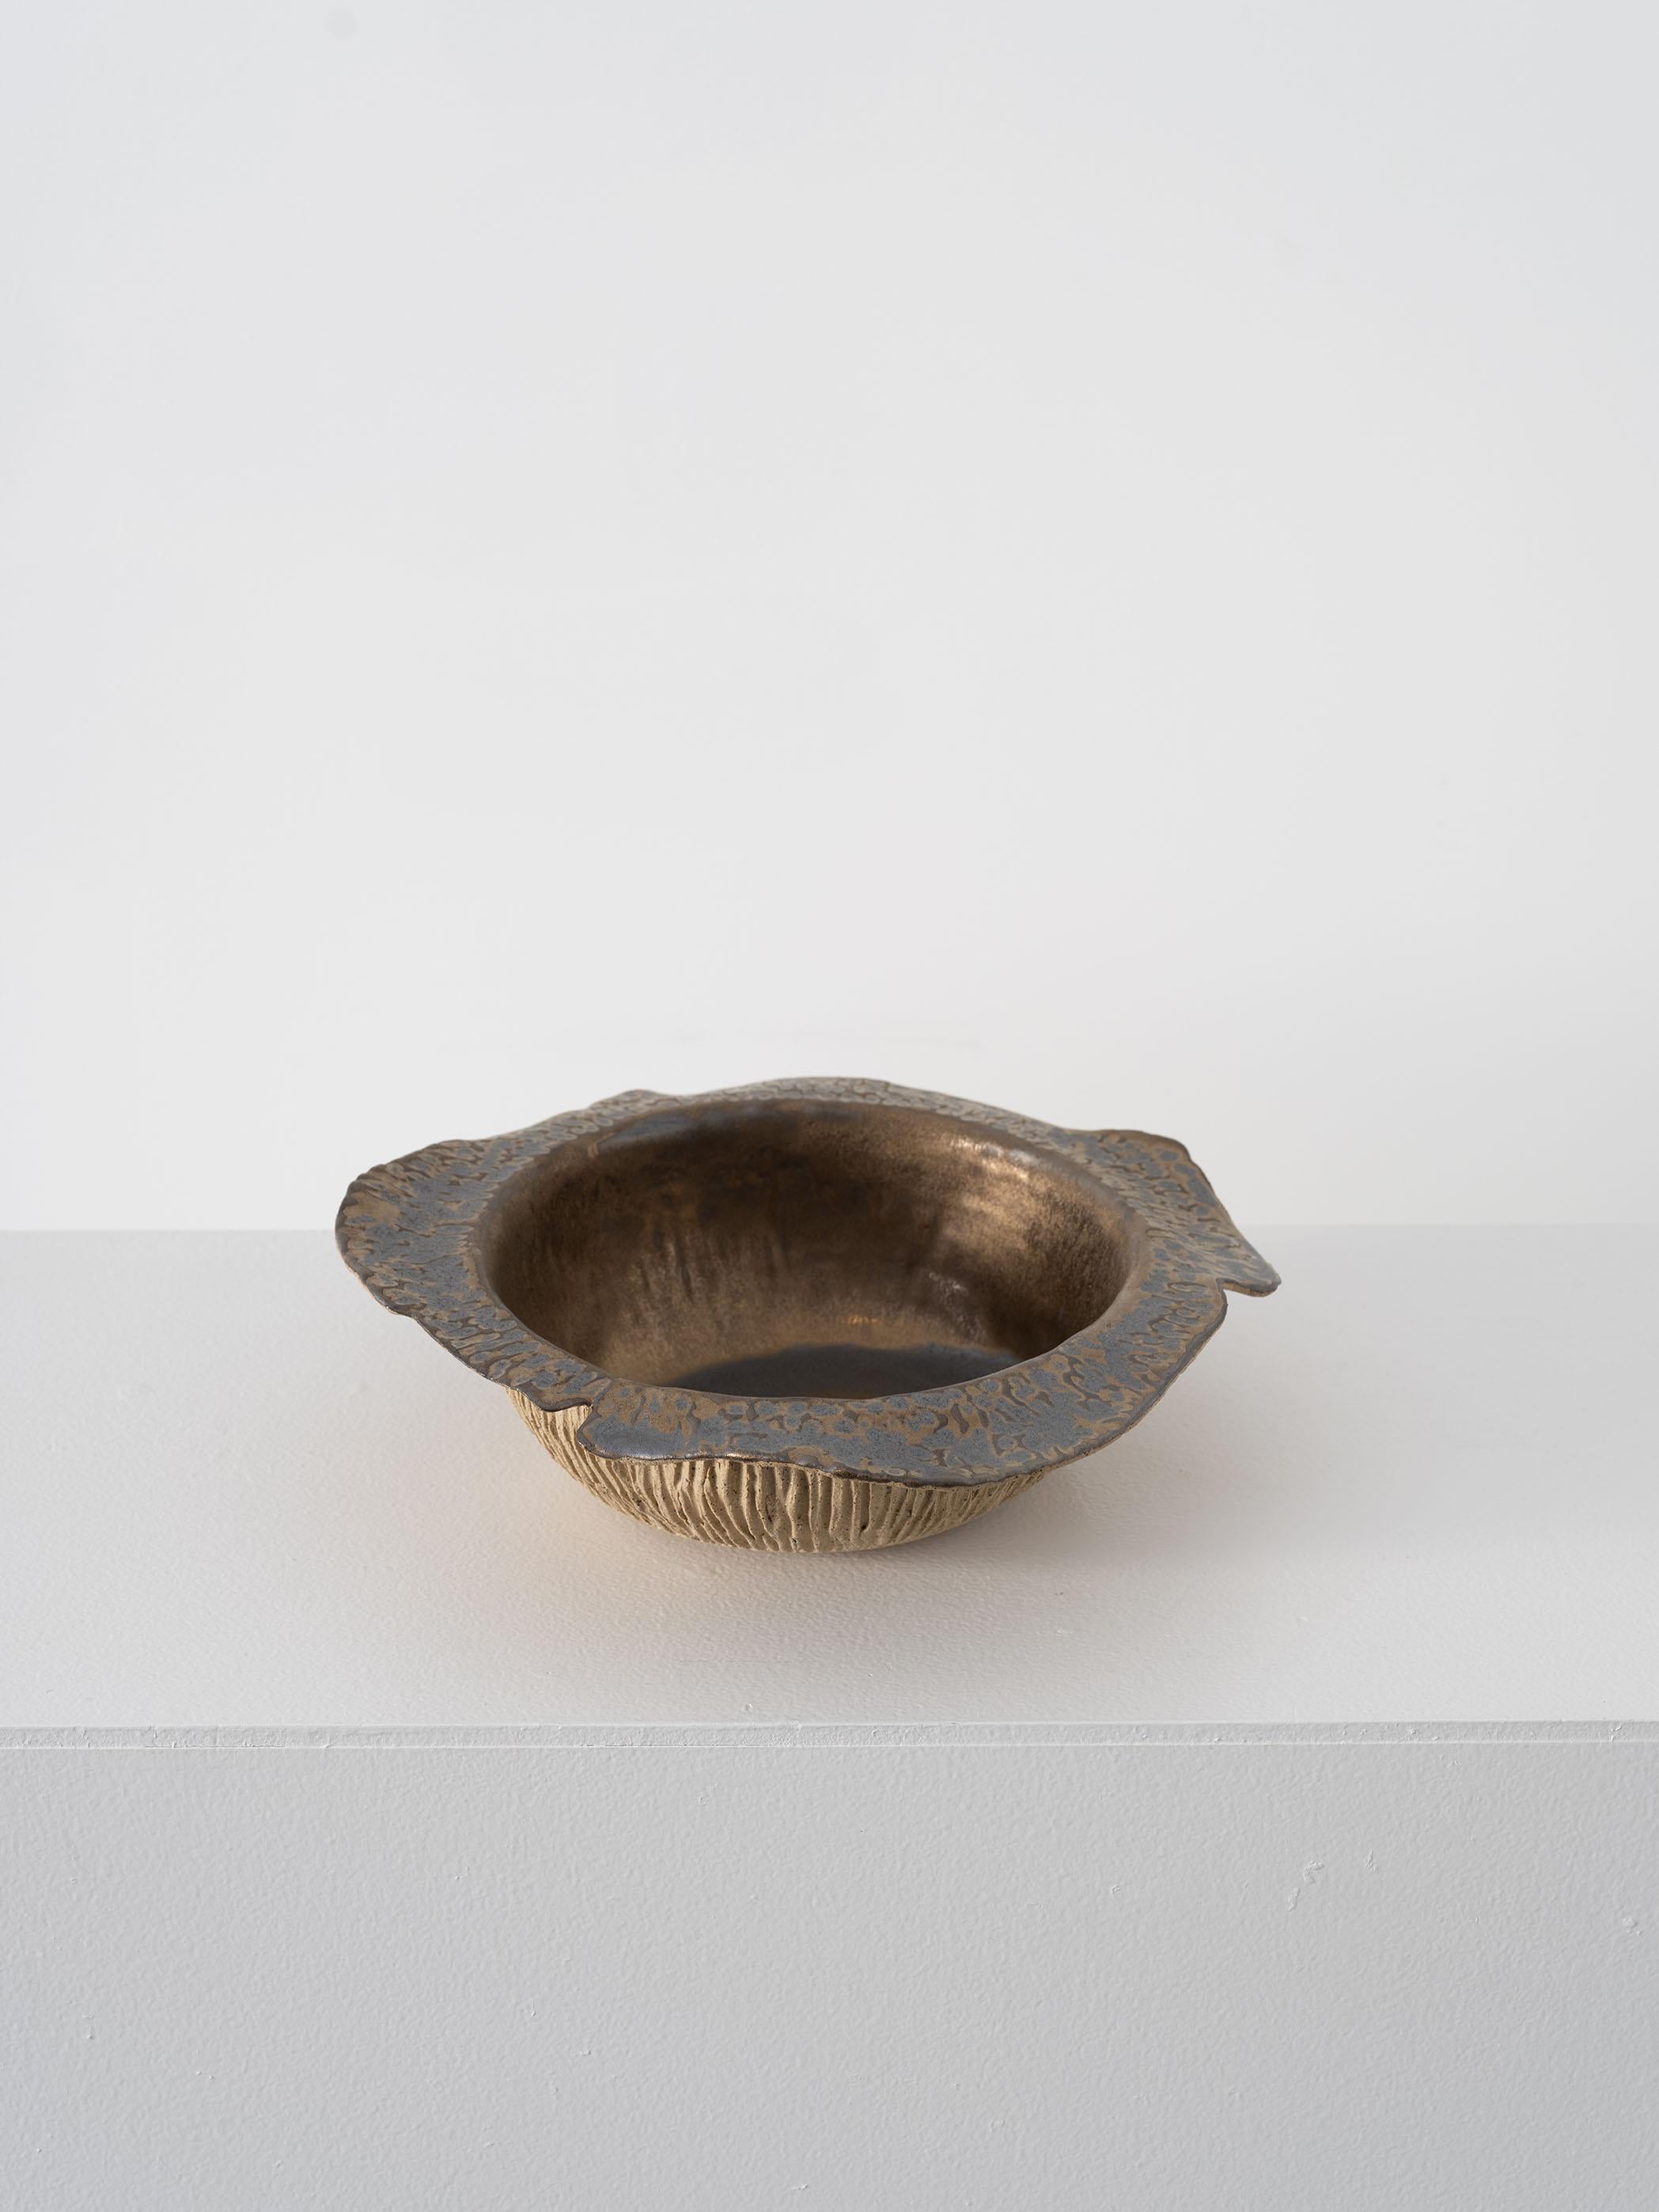 Trish DeMasi.
Lilie bowl, 2022.
Metallic glazed and speckled ceramic.
Measures: 10.5 x 10.75 x 3.5 in.